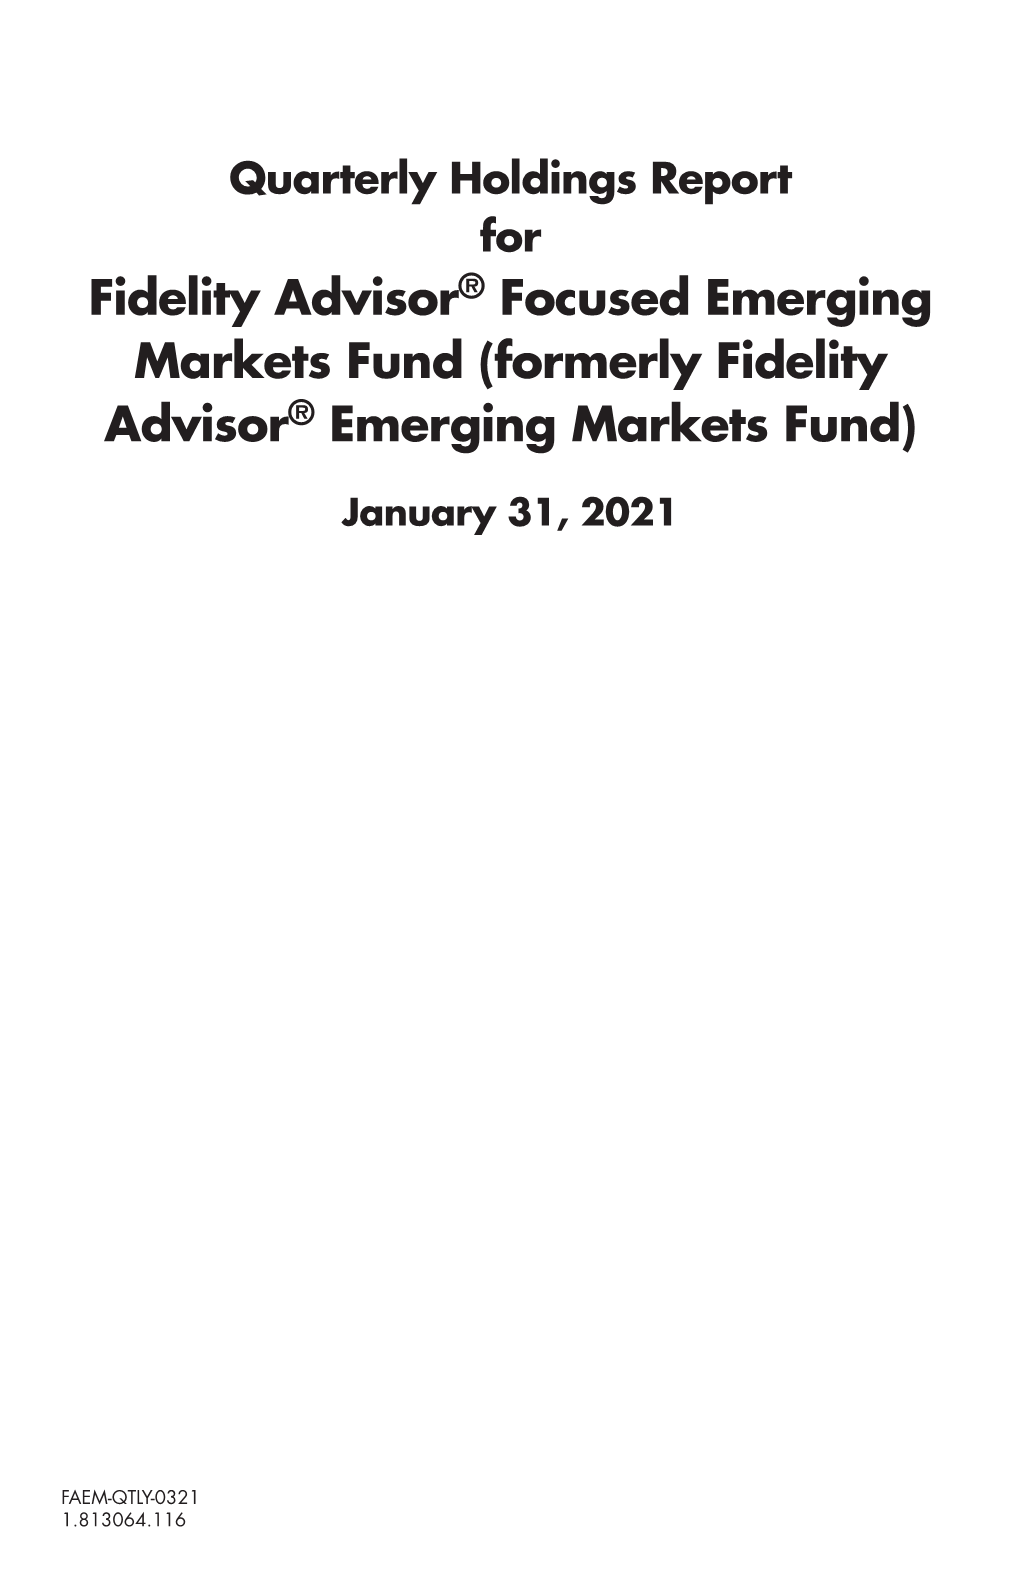 Fidelity Advisor® Focused Emerging Markets Fund (Formerly Fidelity Advisor® Emerging Markets Fund)